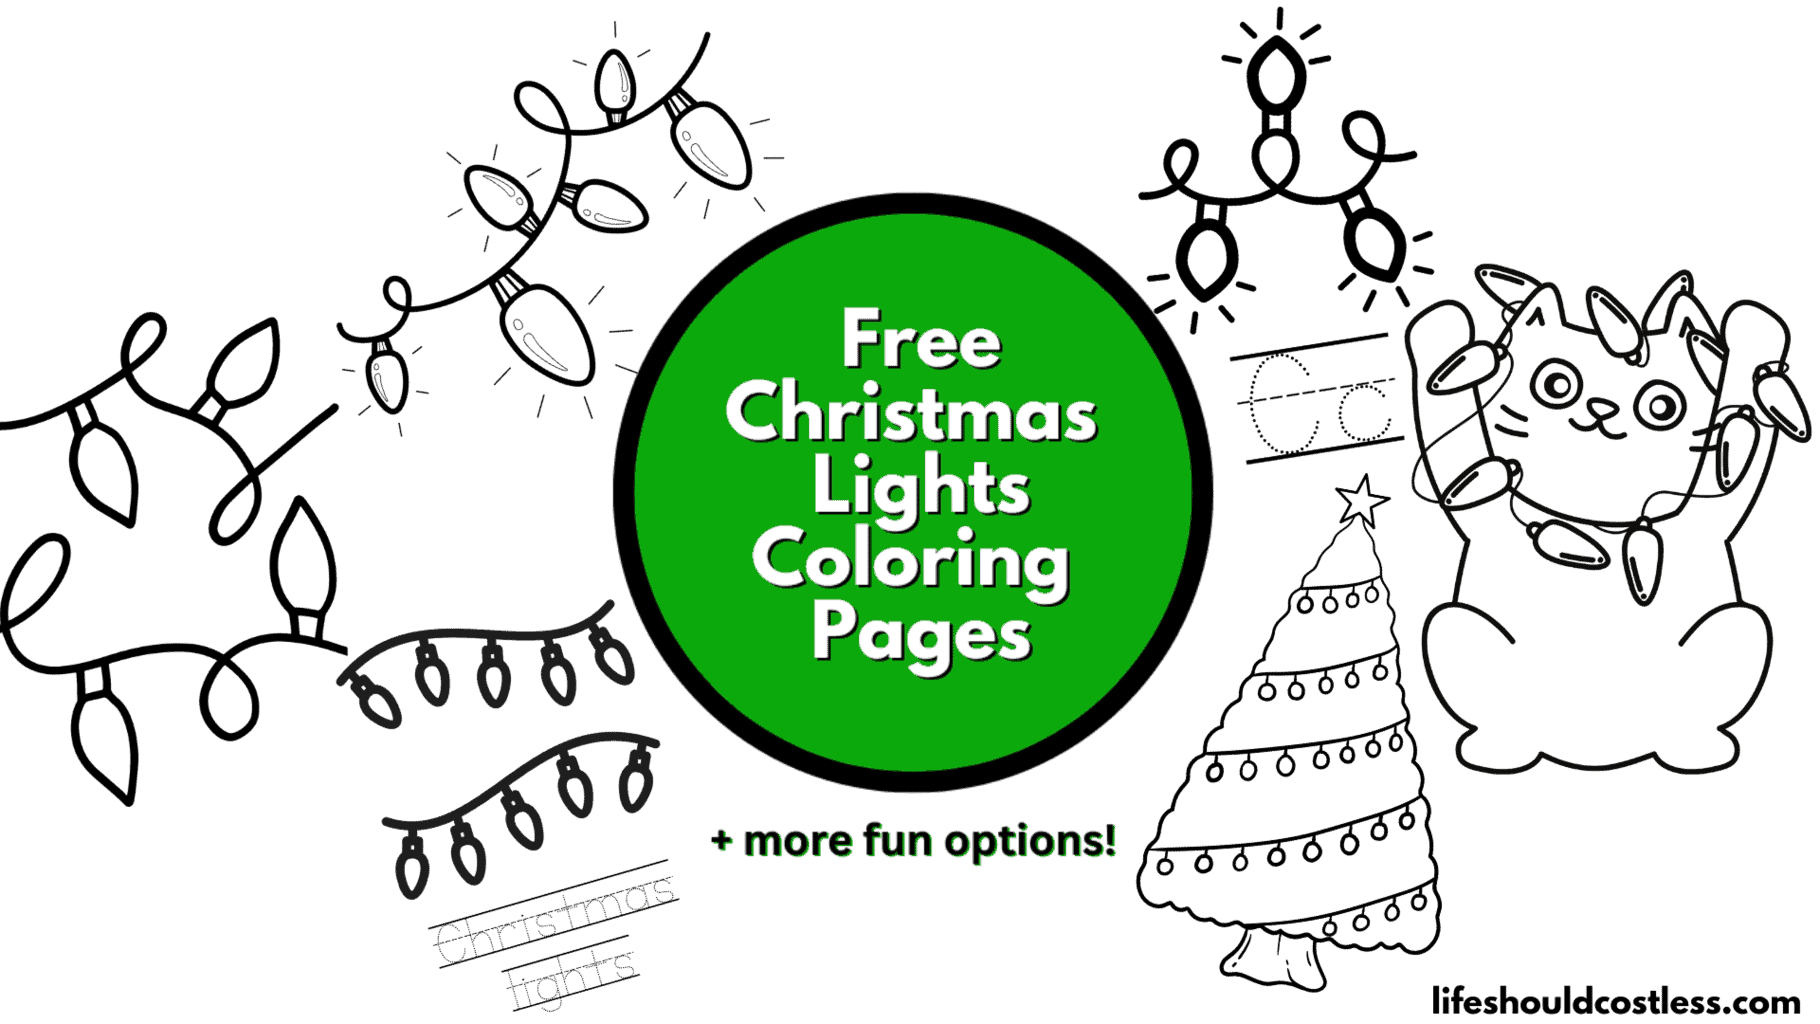 Christmas lights coloring pages free printable pdf templates